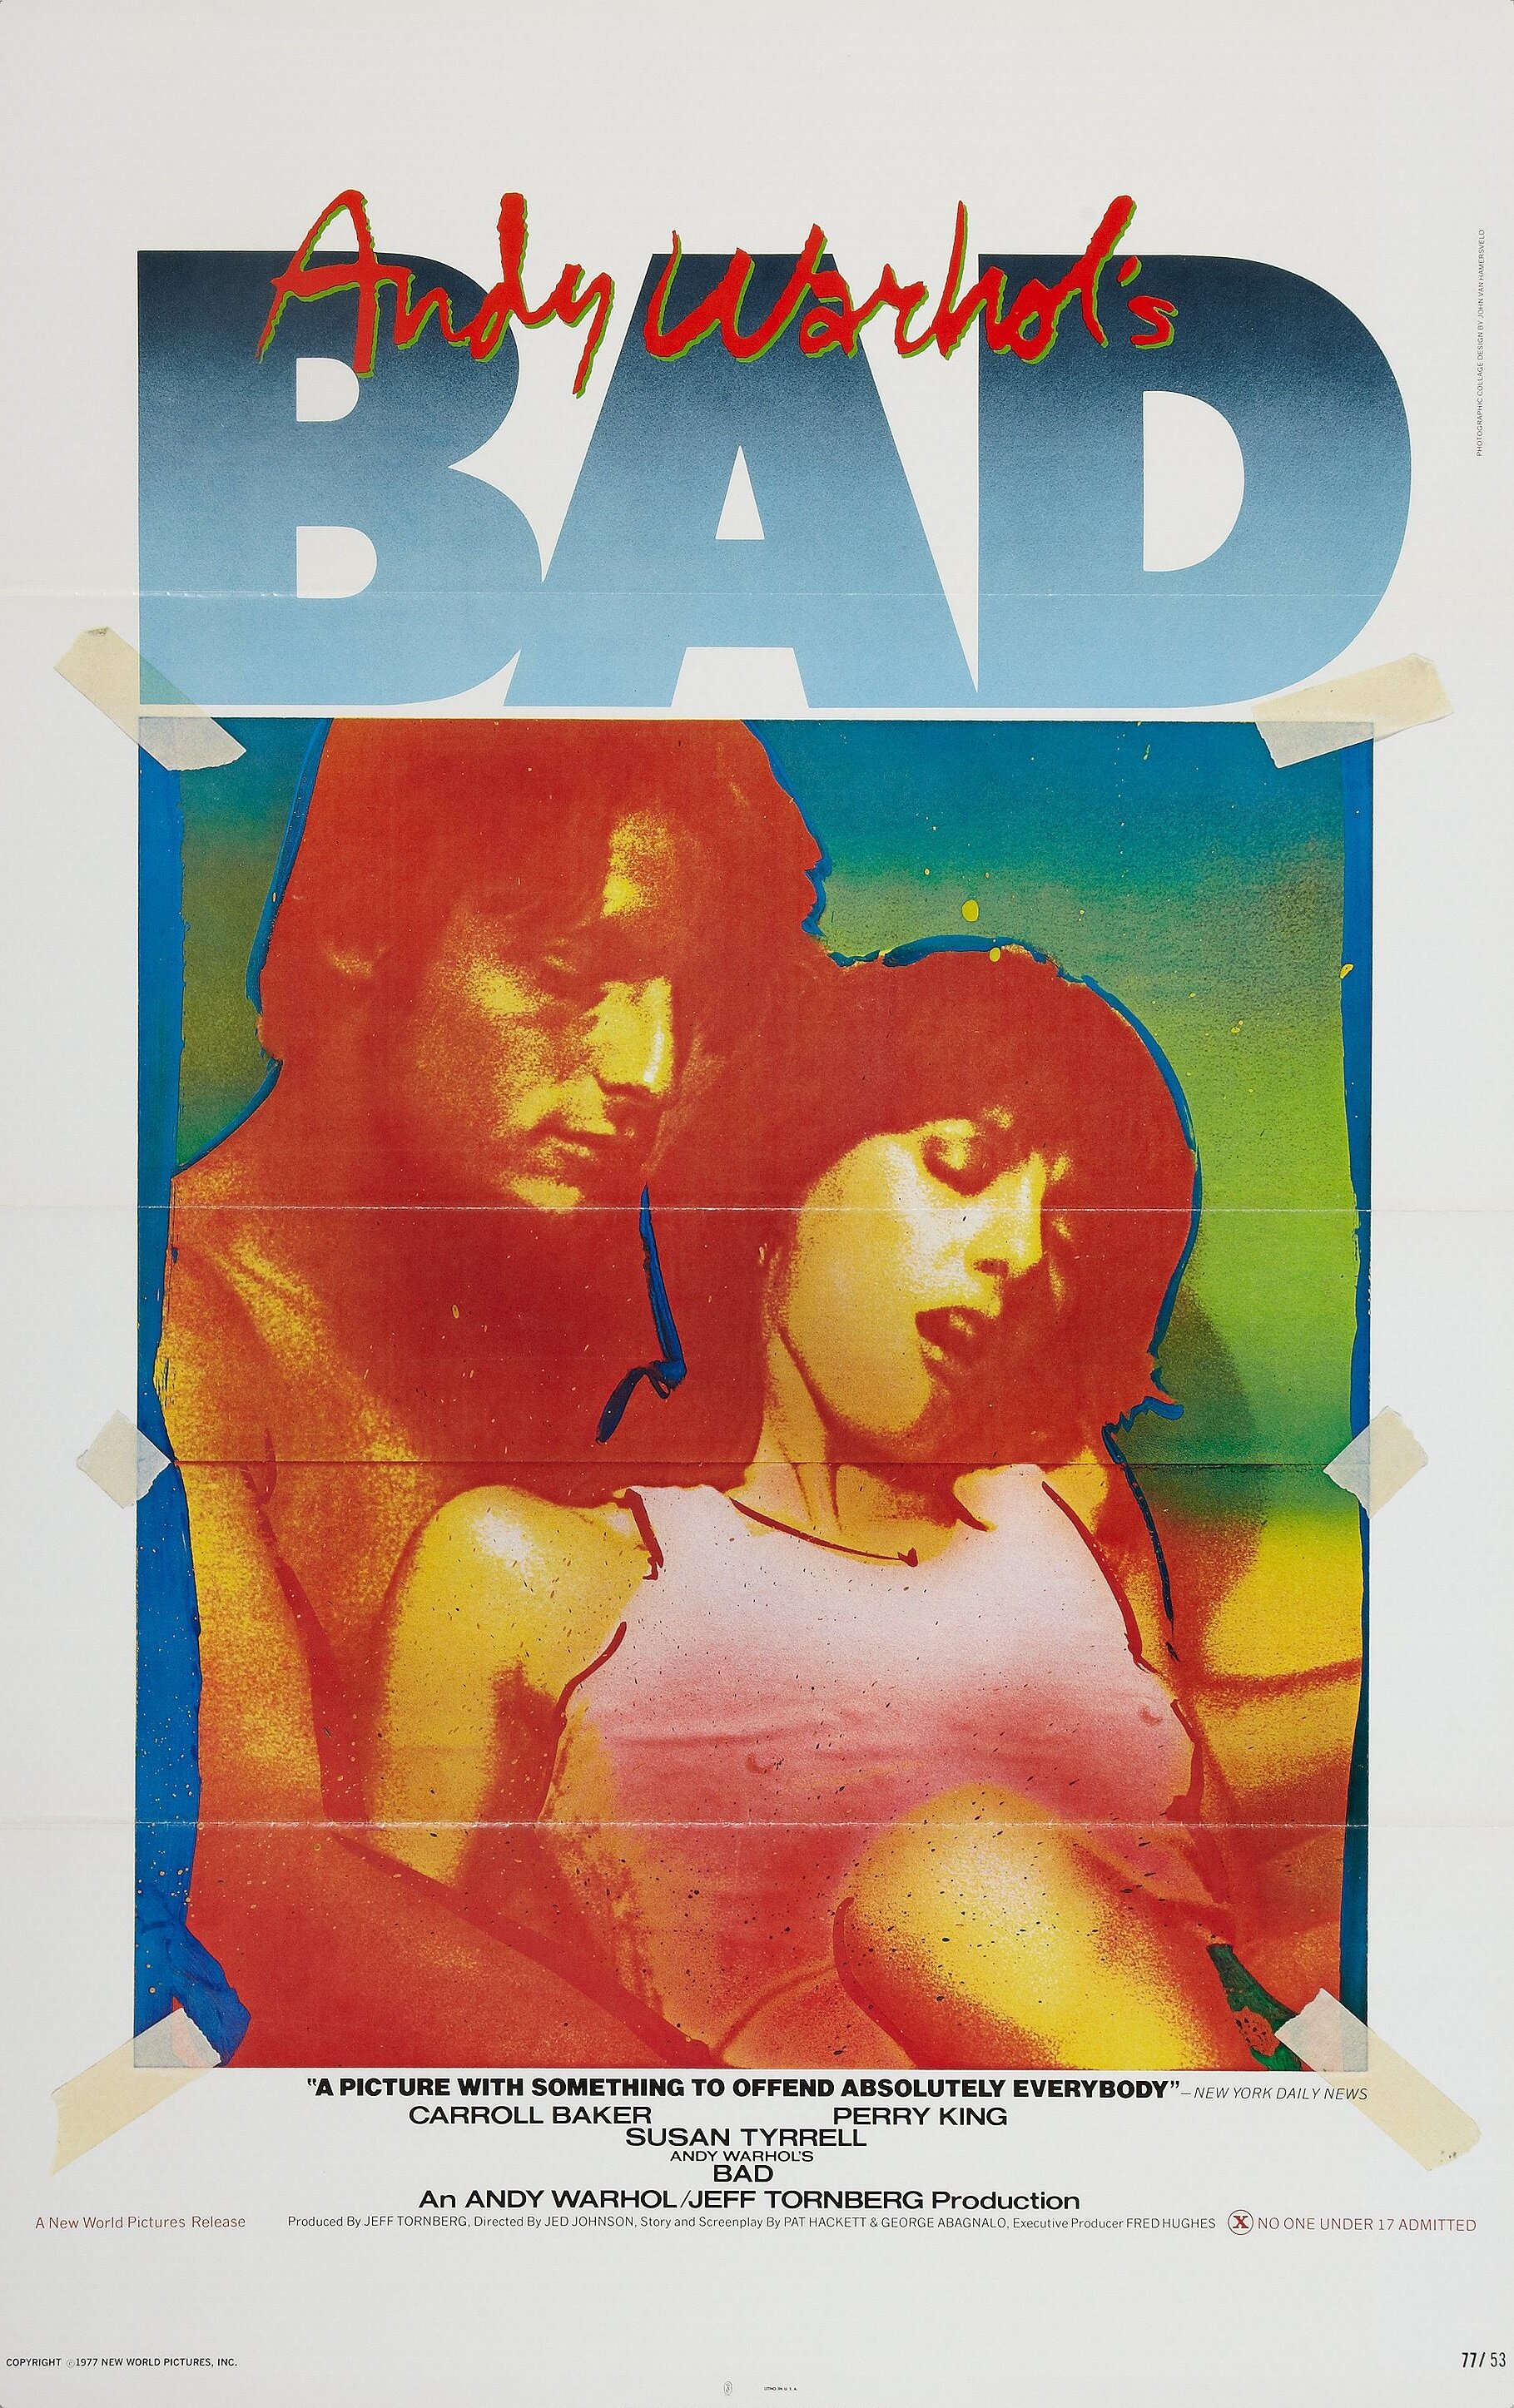 Andy Warhol's Bad DVD